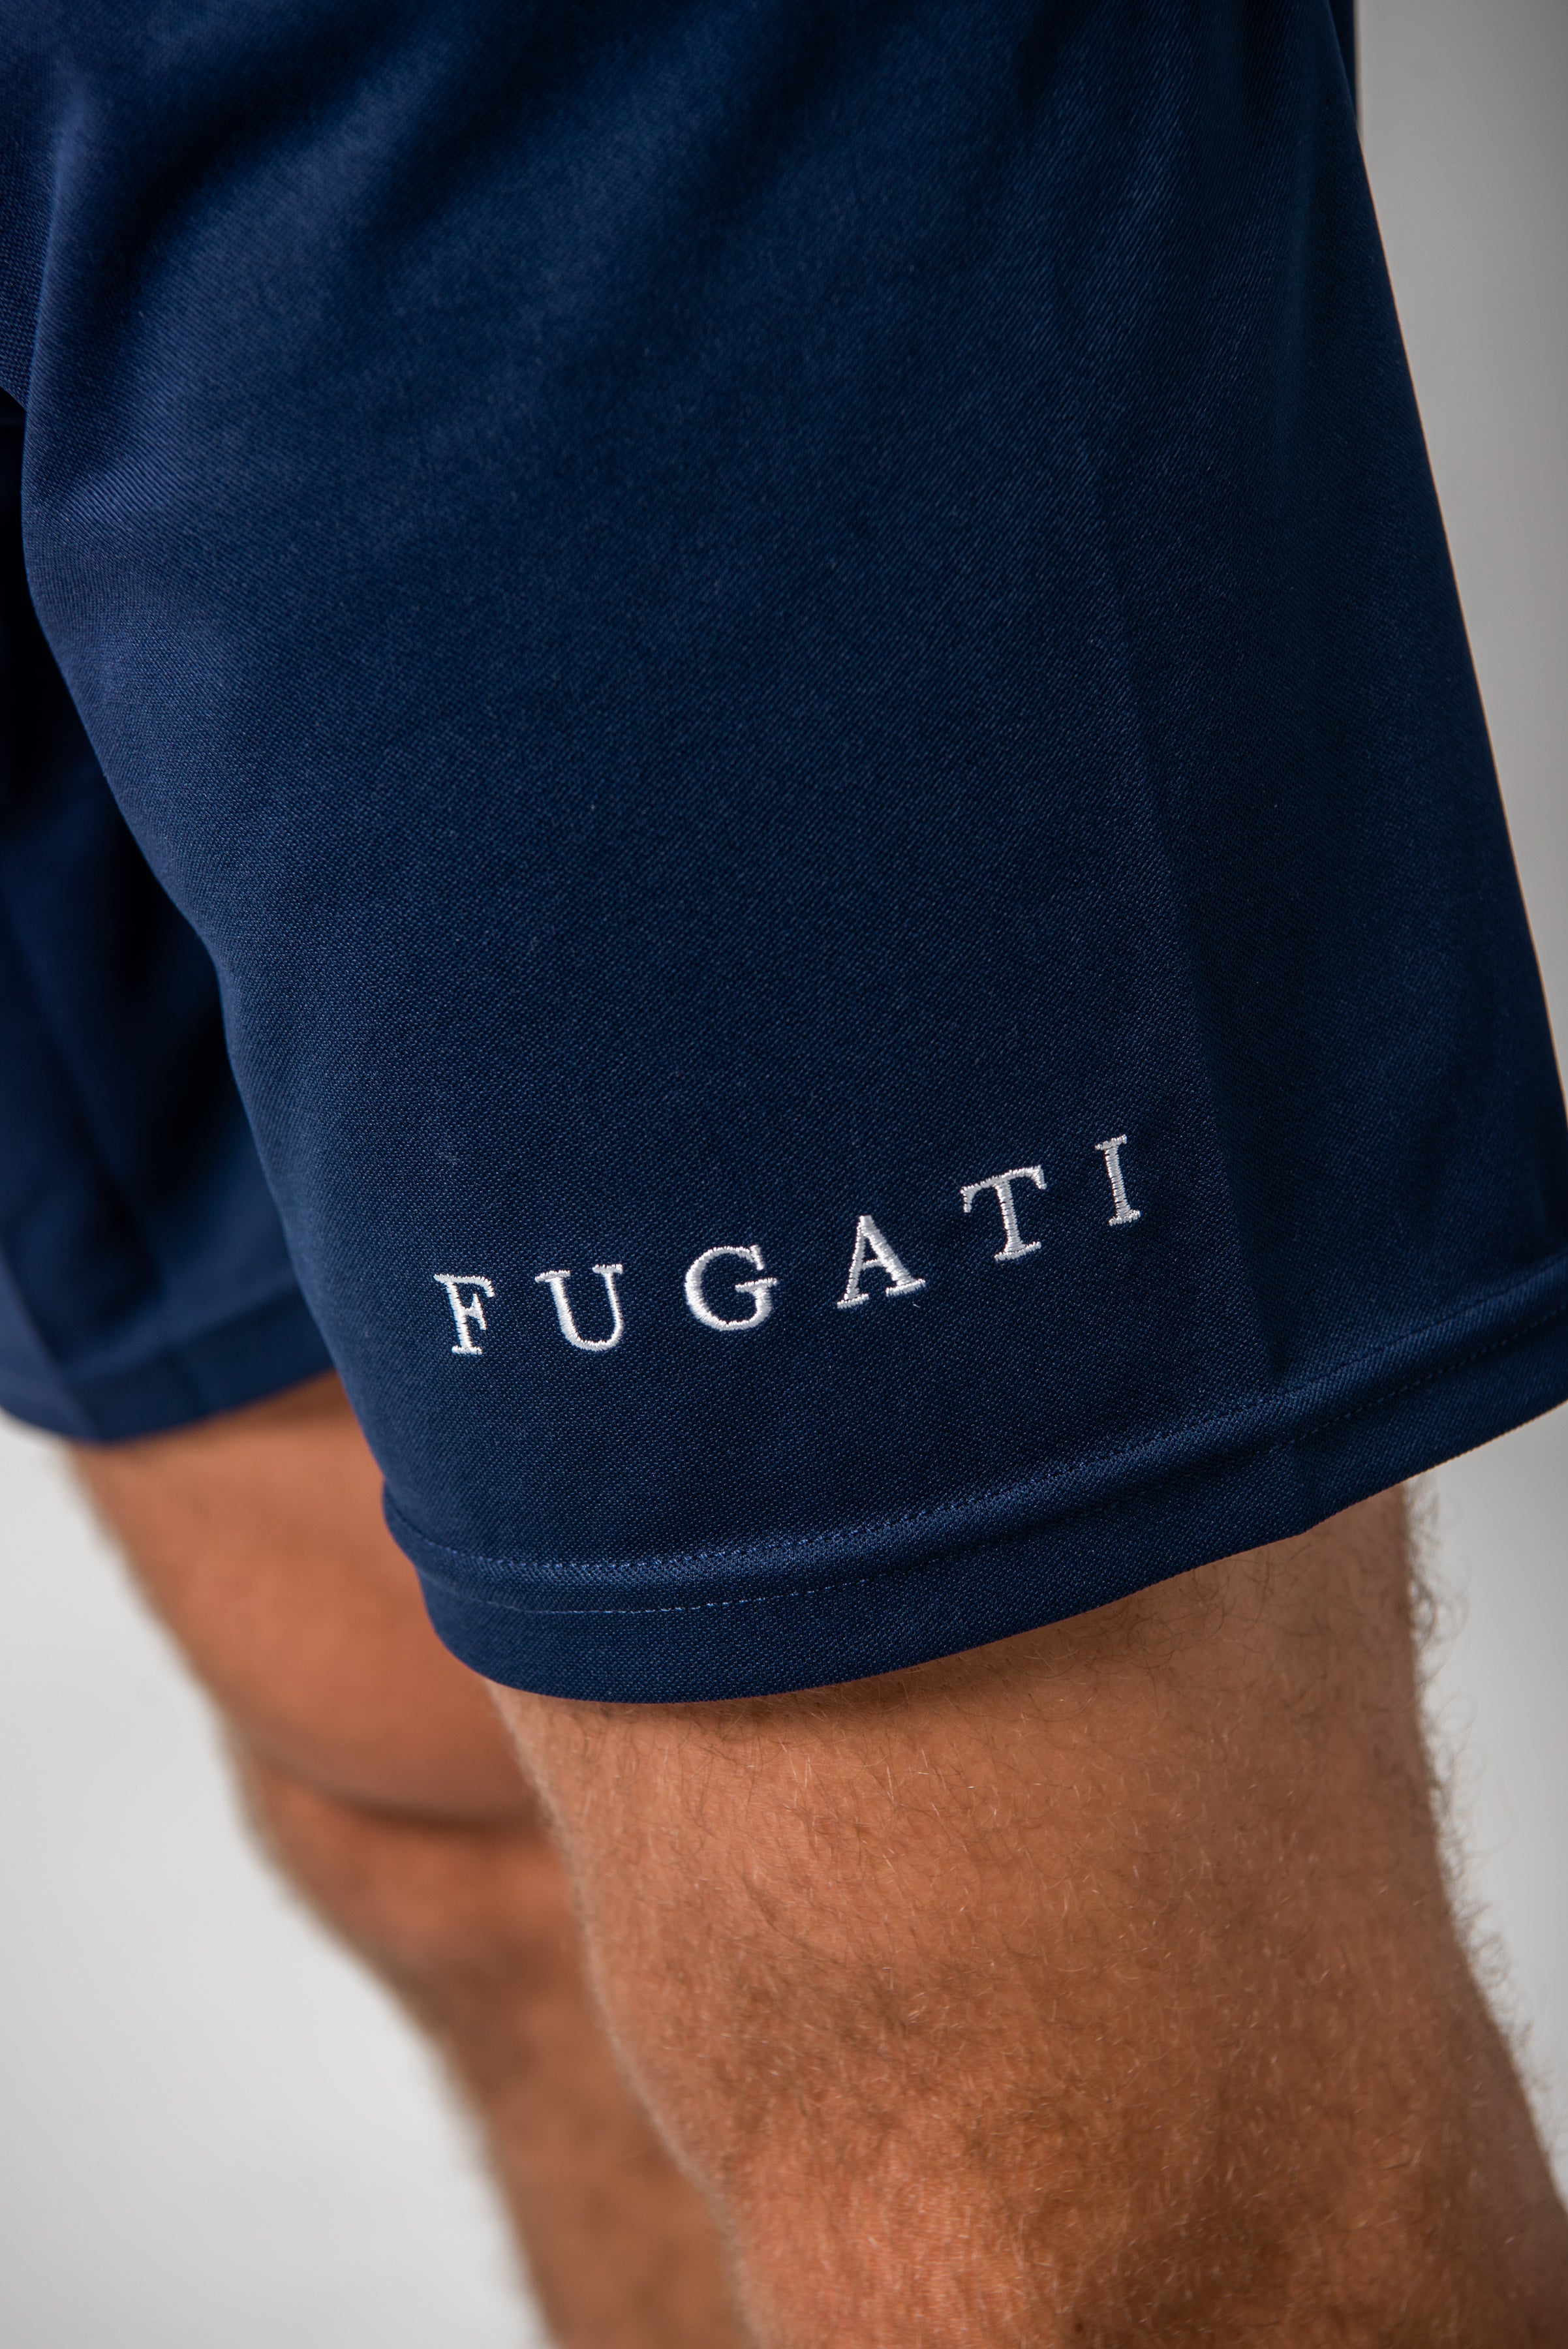 Fugati Shorts - Navy Blue